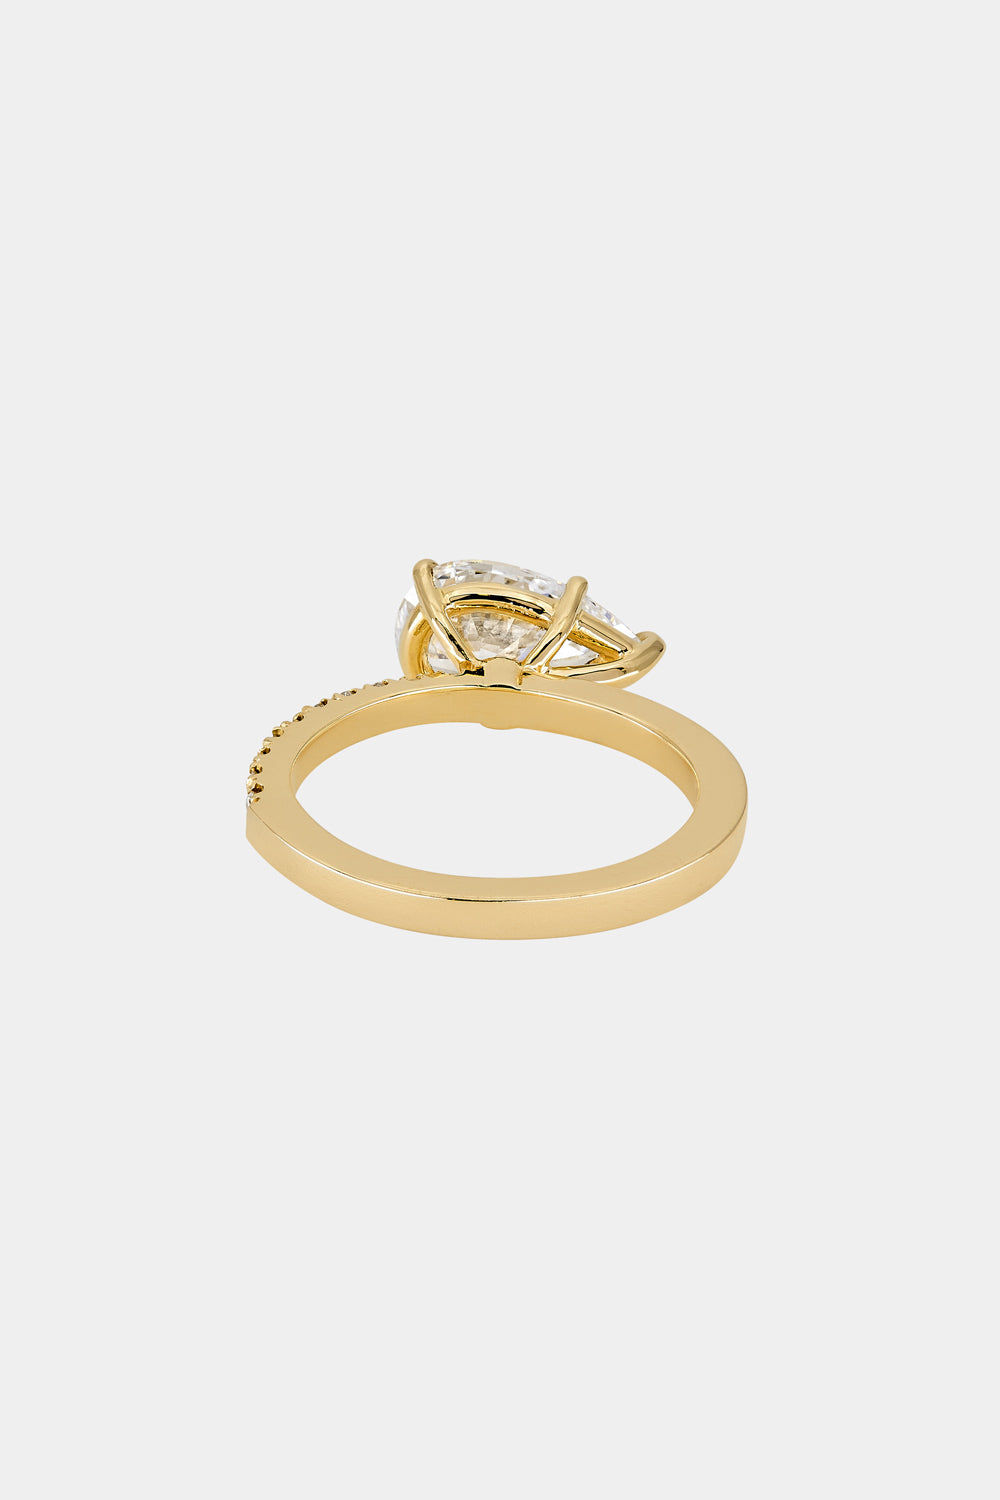 East West Pear Diamond Ring | 18K Gold| Natasha Schweitzer